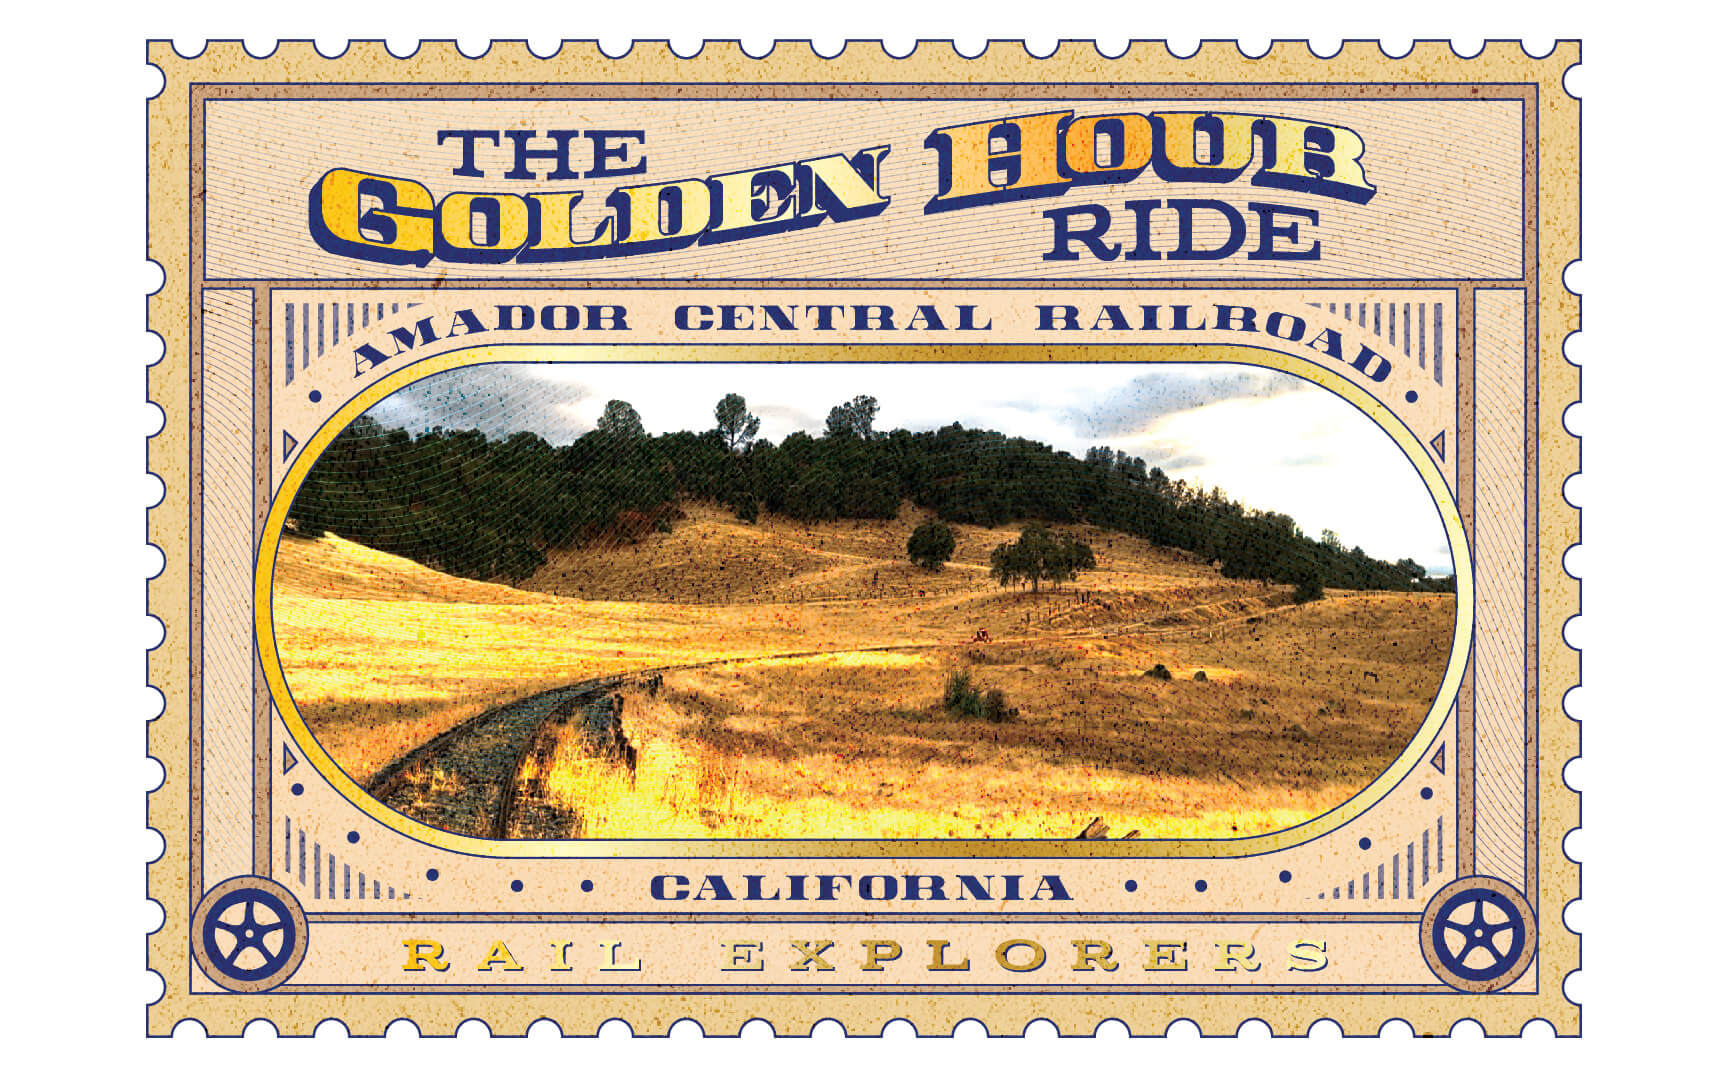 Amador, CA: The Golden Hour Ride